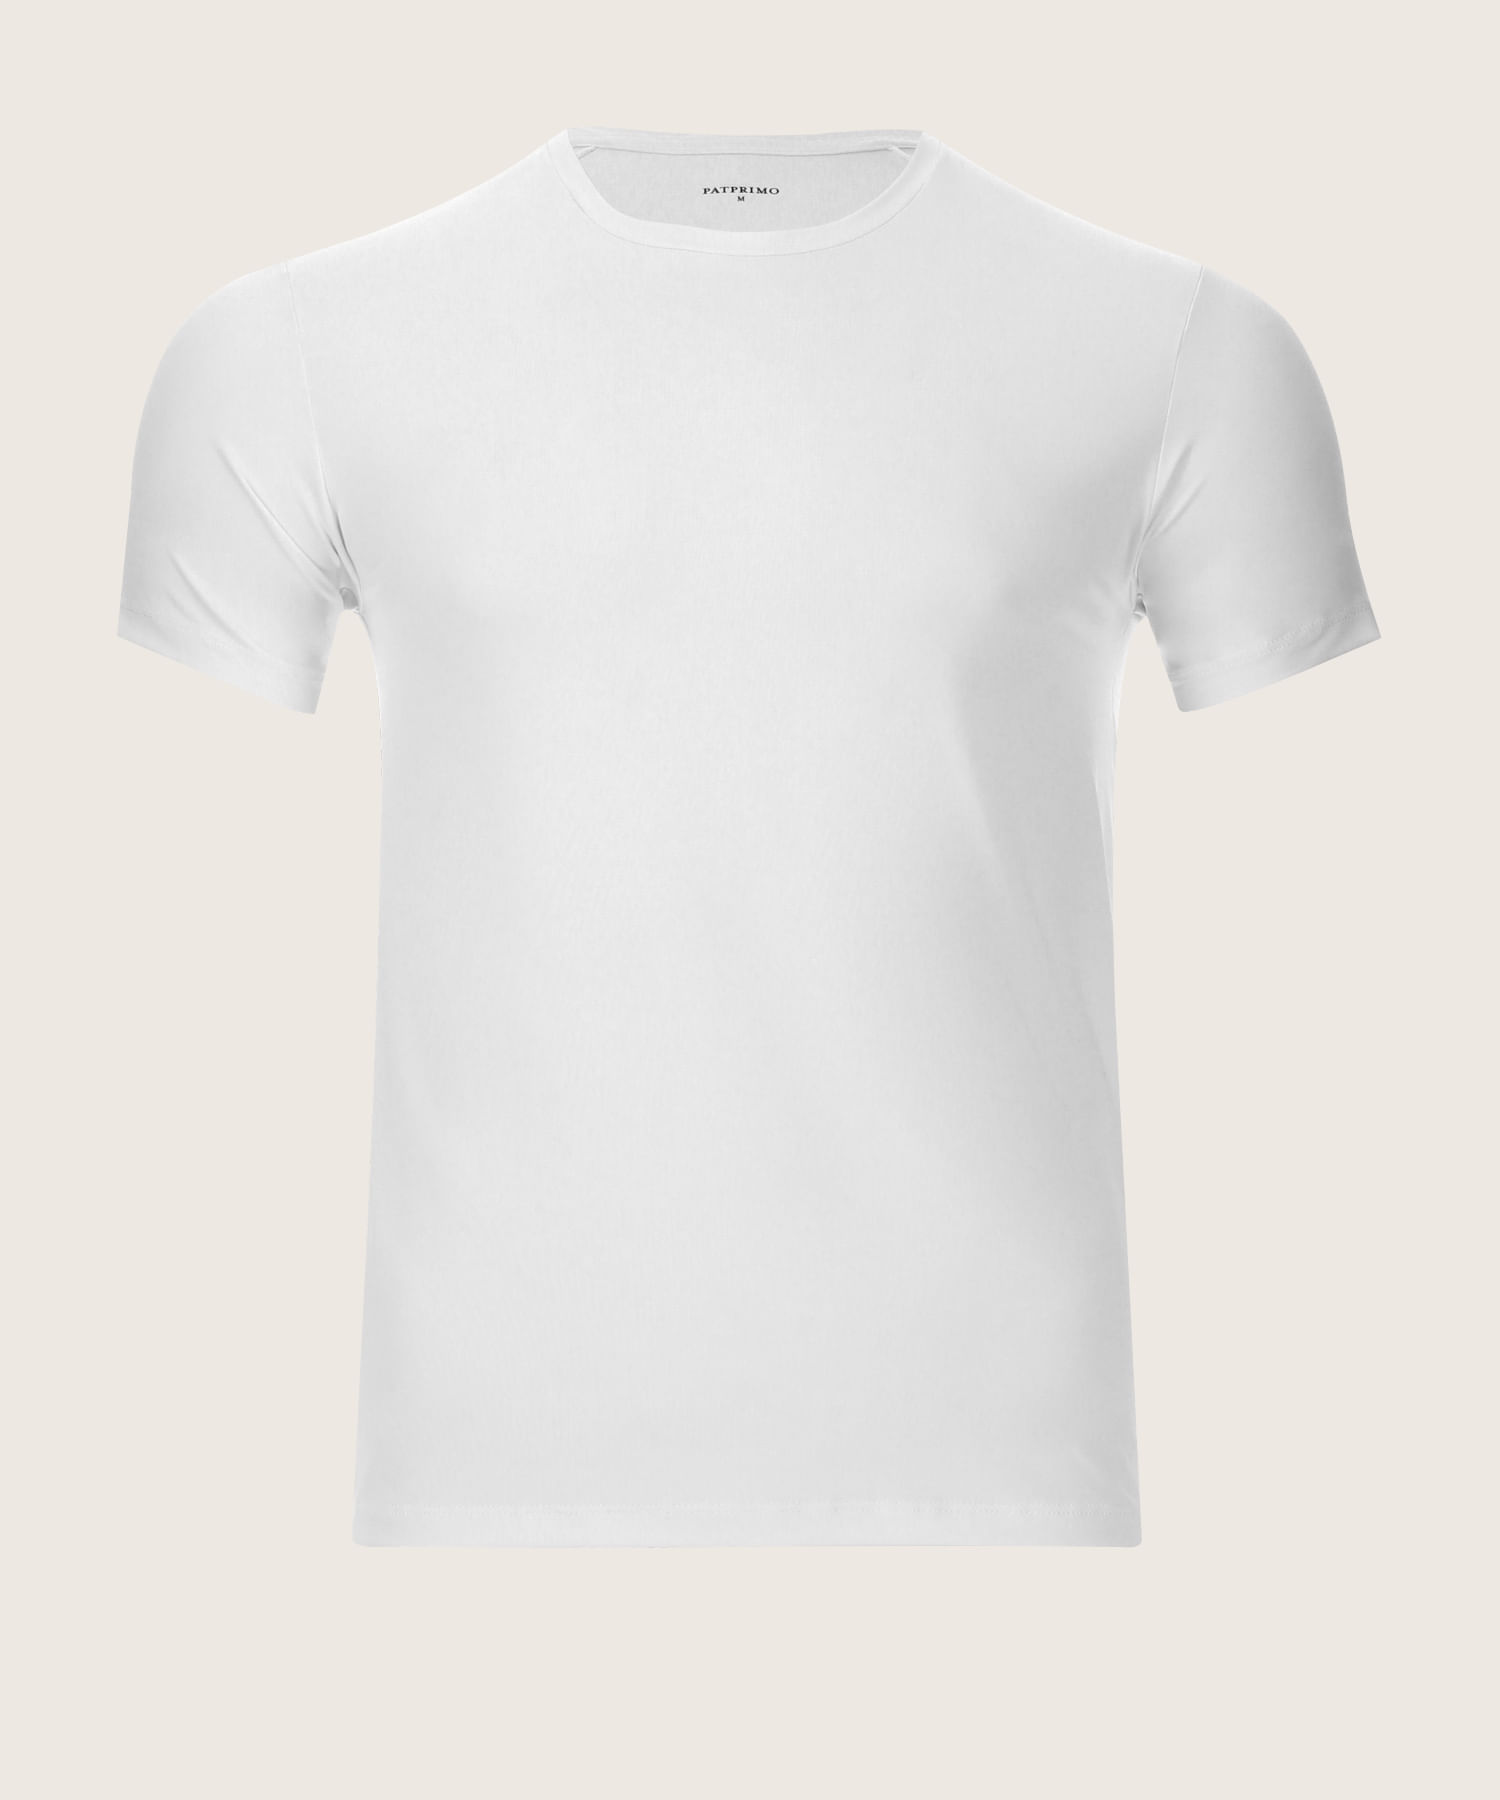 Camiseta blanca hombre